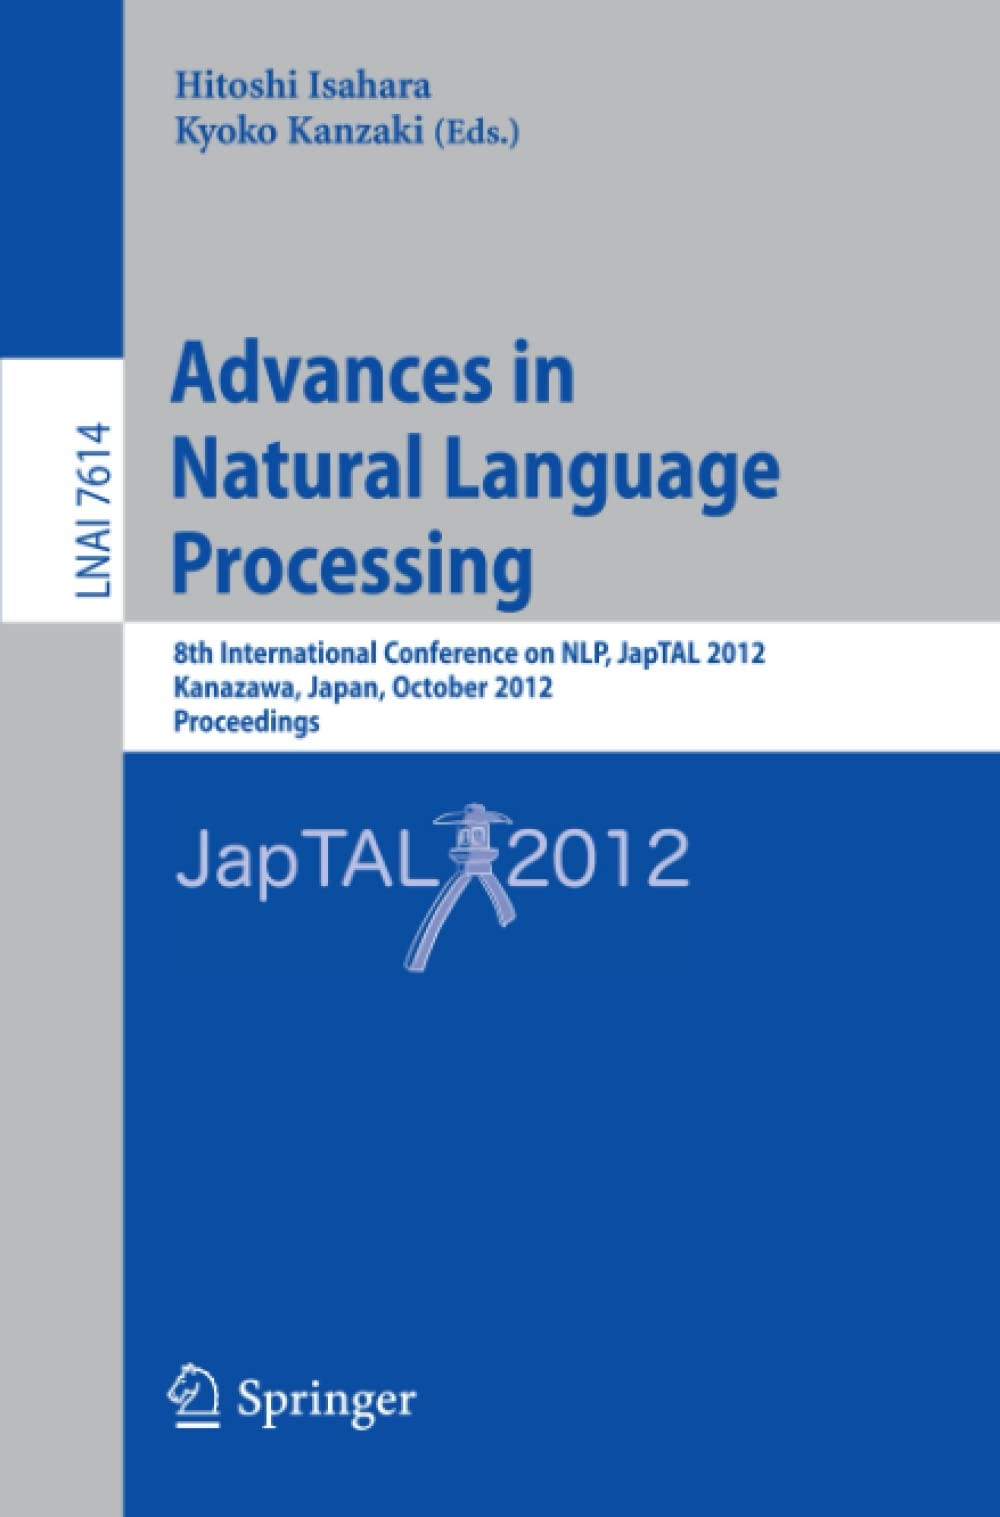 Advances in Natural Language Processing: 8th International Conference on NLP, JapTAL 2012, Kanazawa, Japan, October 22-24, 2012, Proceedings